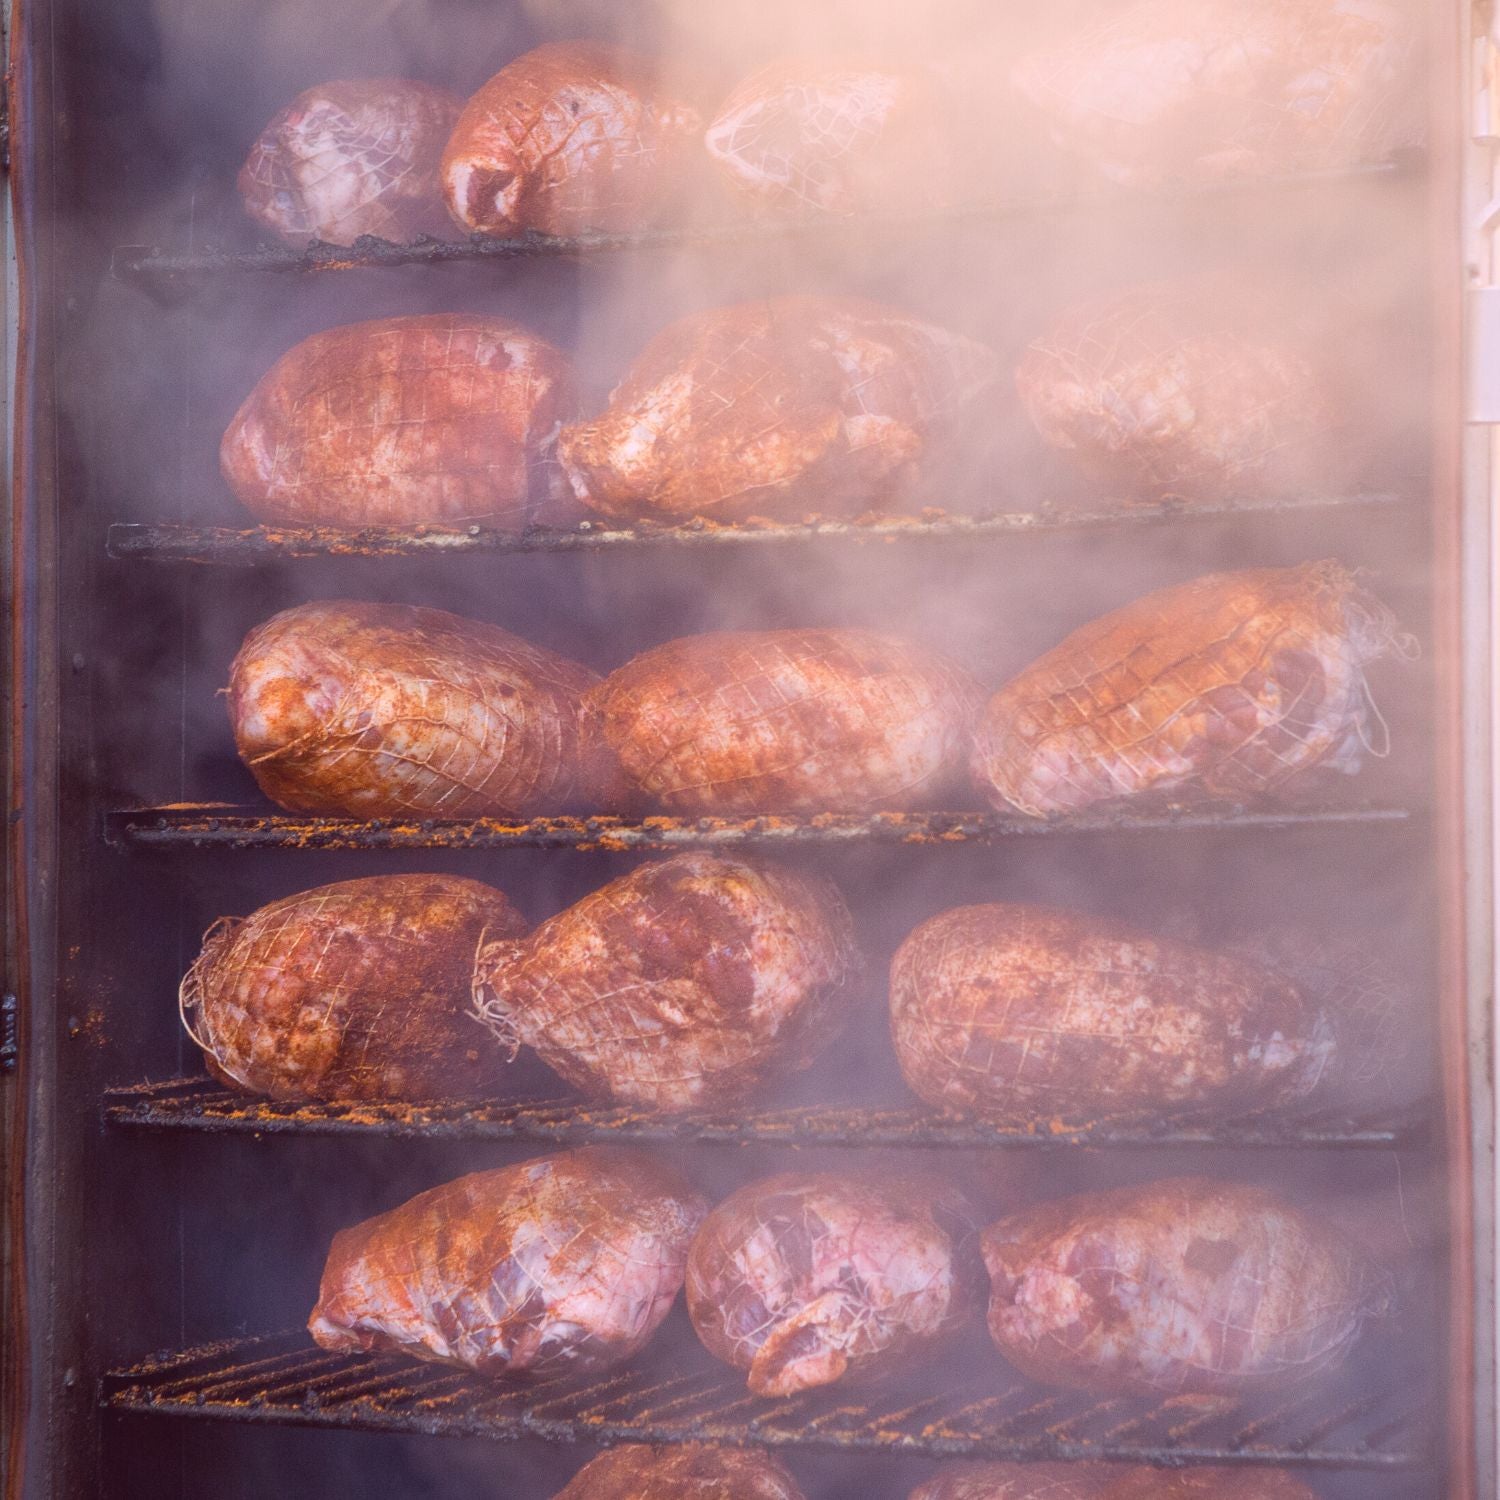 Meat Preparation Smoking Smoke Meat like a King Secrets Revealed